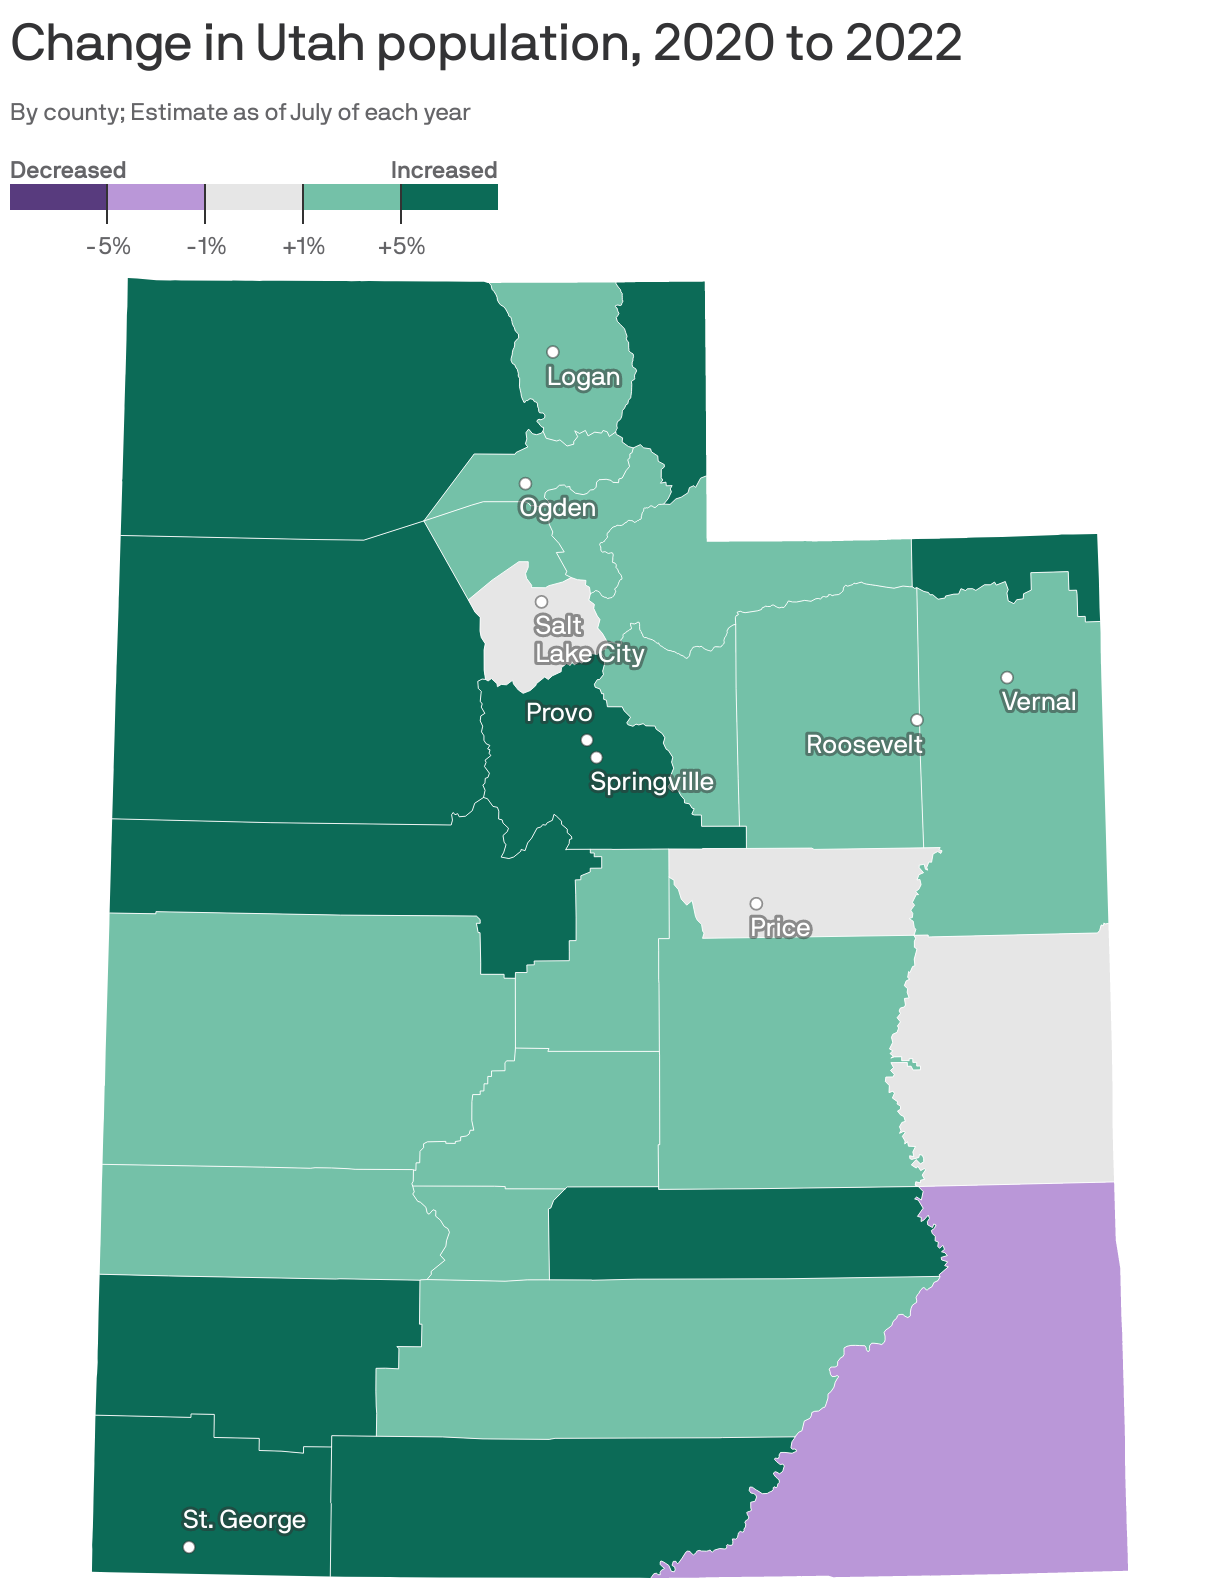 Change in Utah population, 2020 to 2022